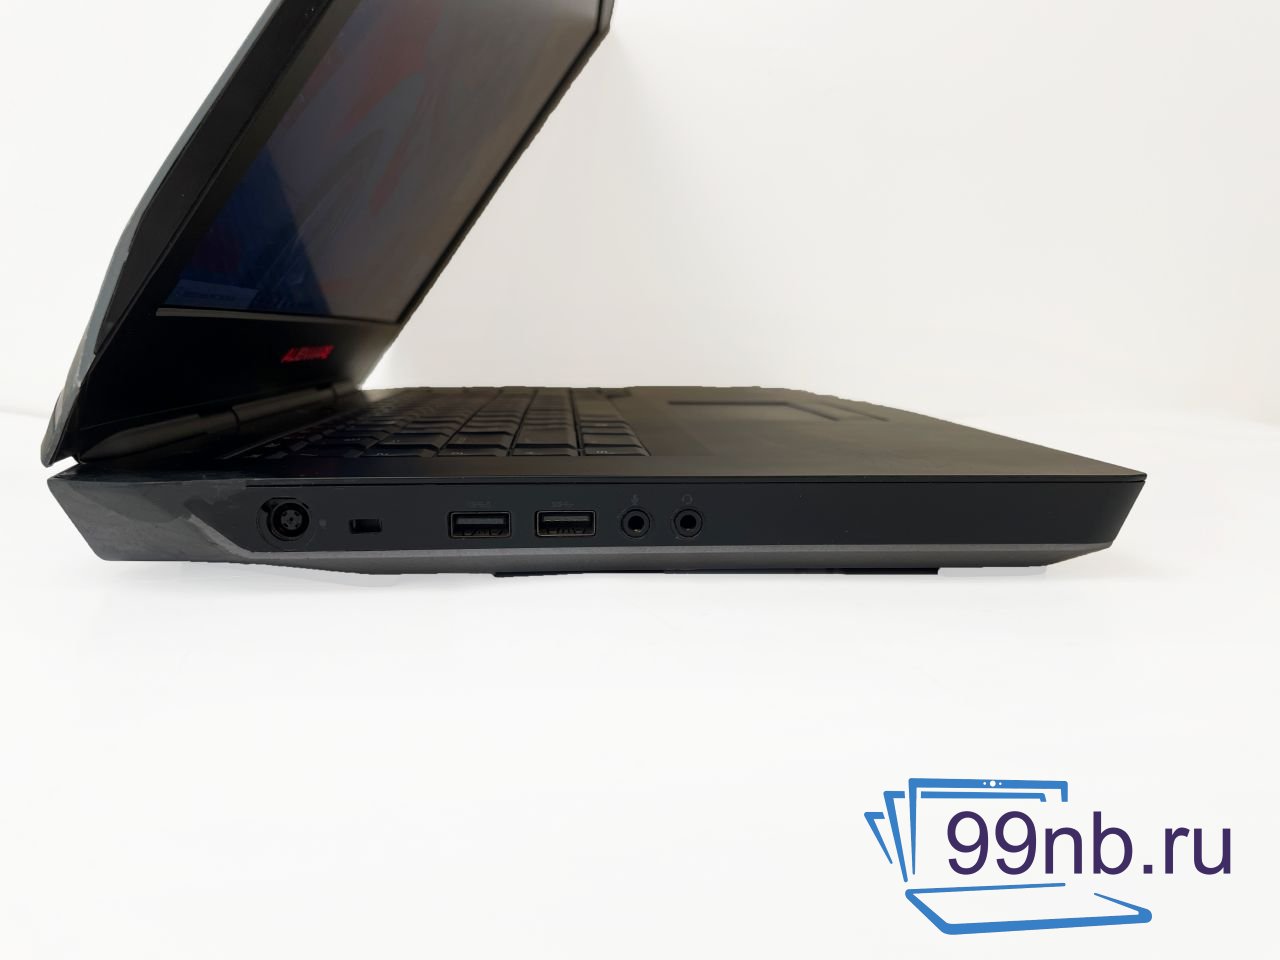  Ноутбук для игр Alienware GeForce GTX 8 GB/Full HD